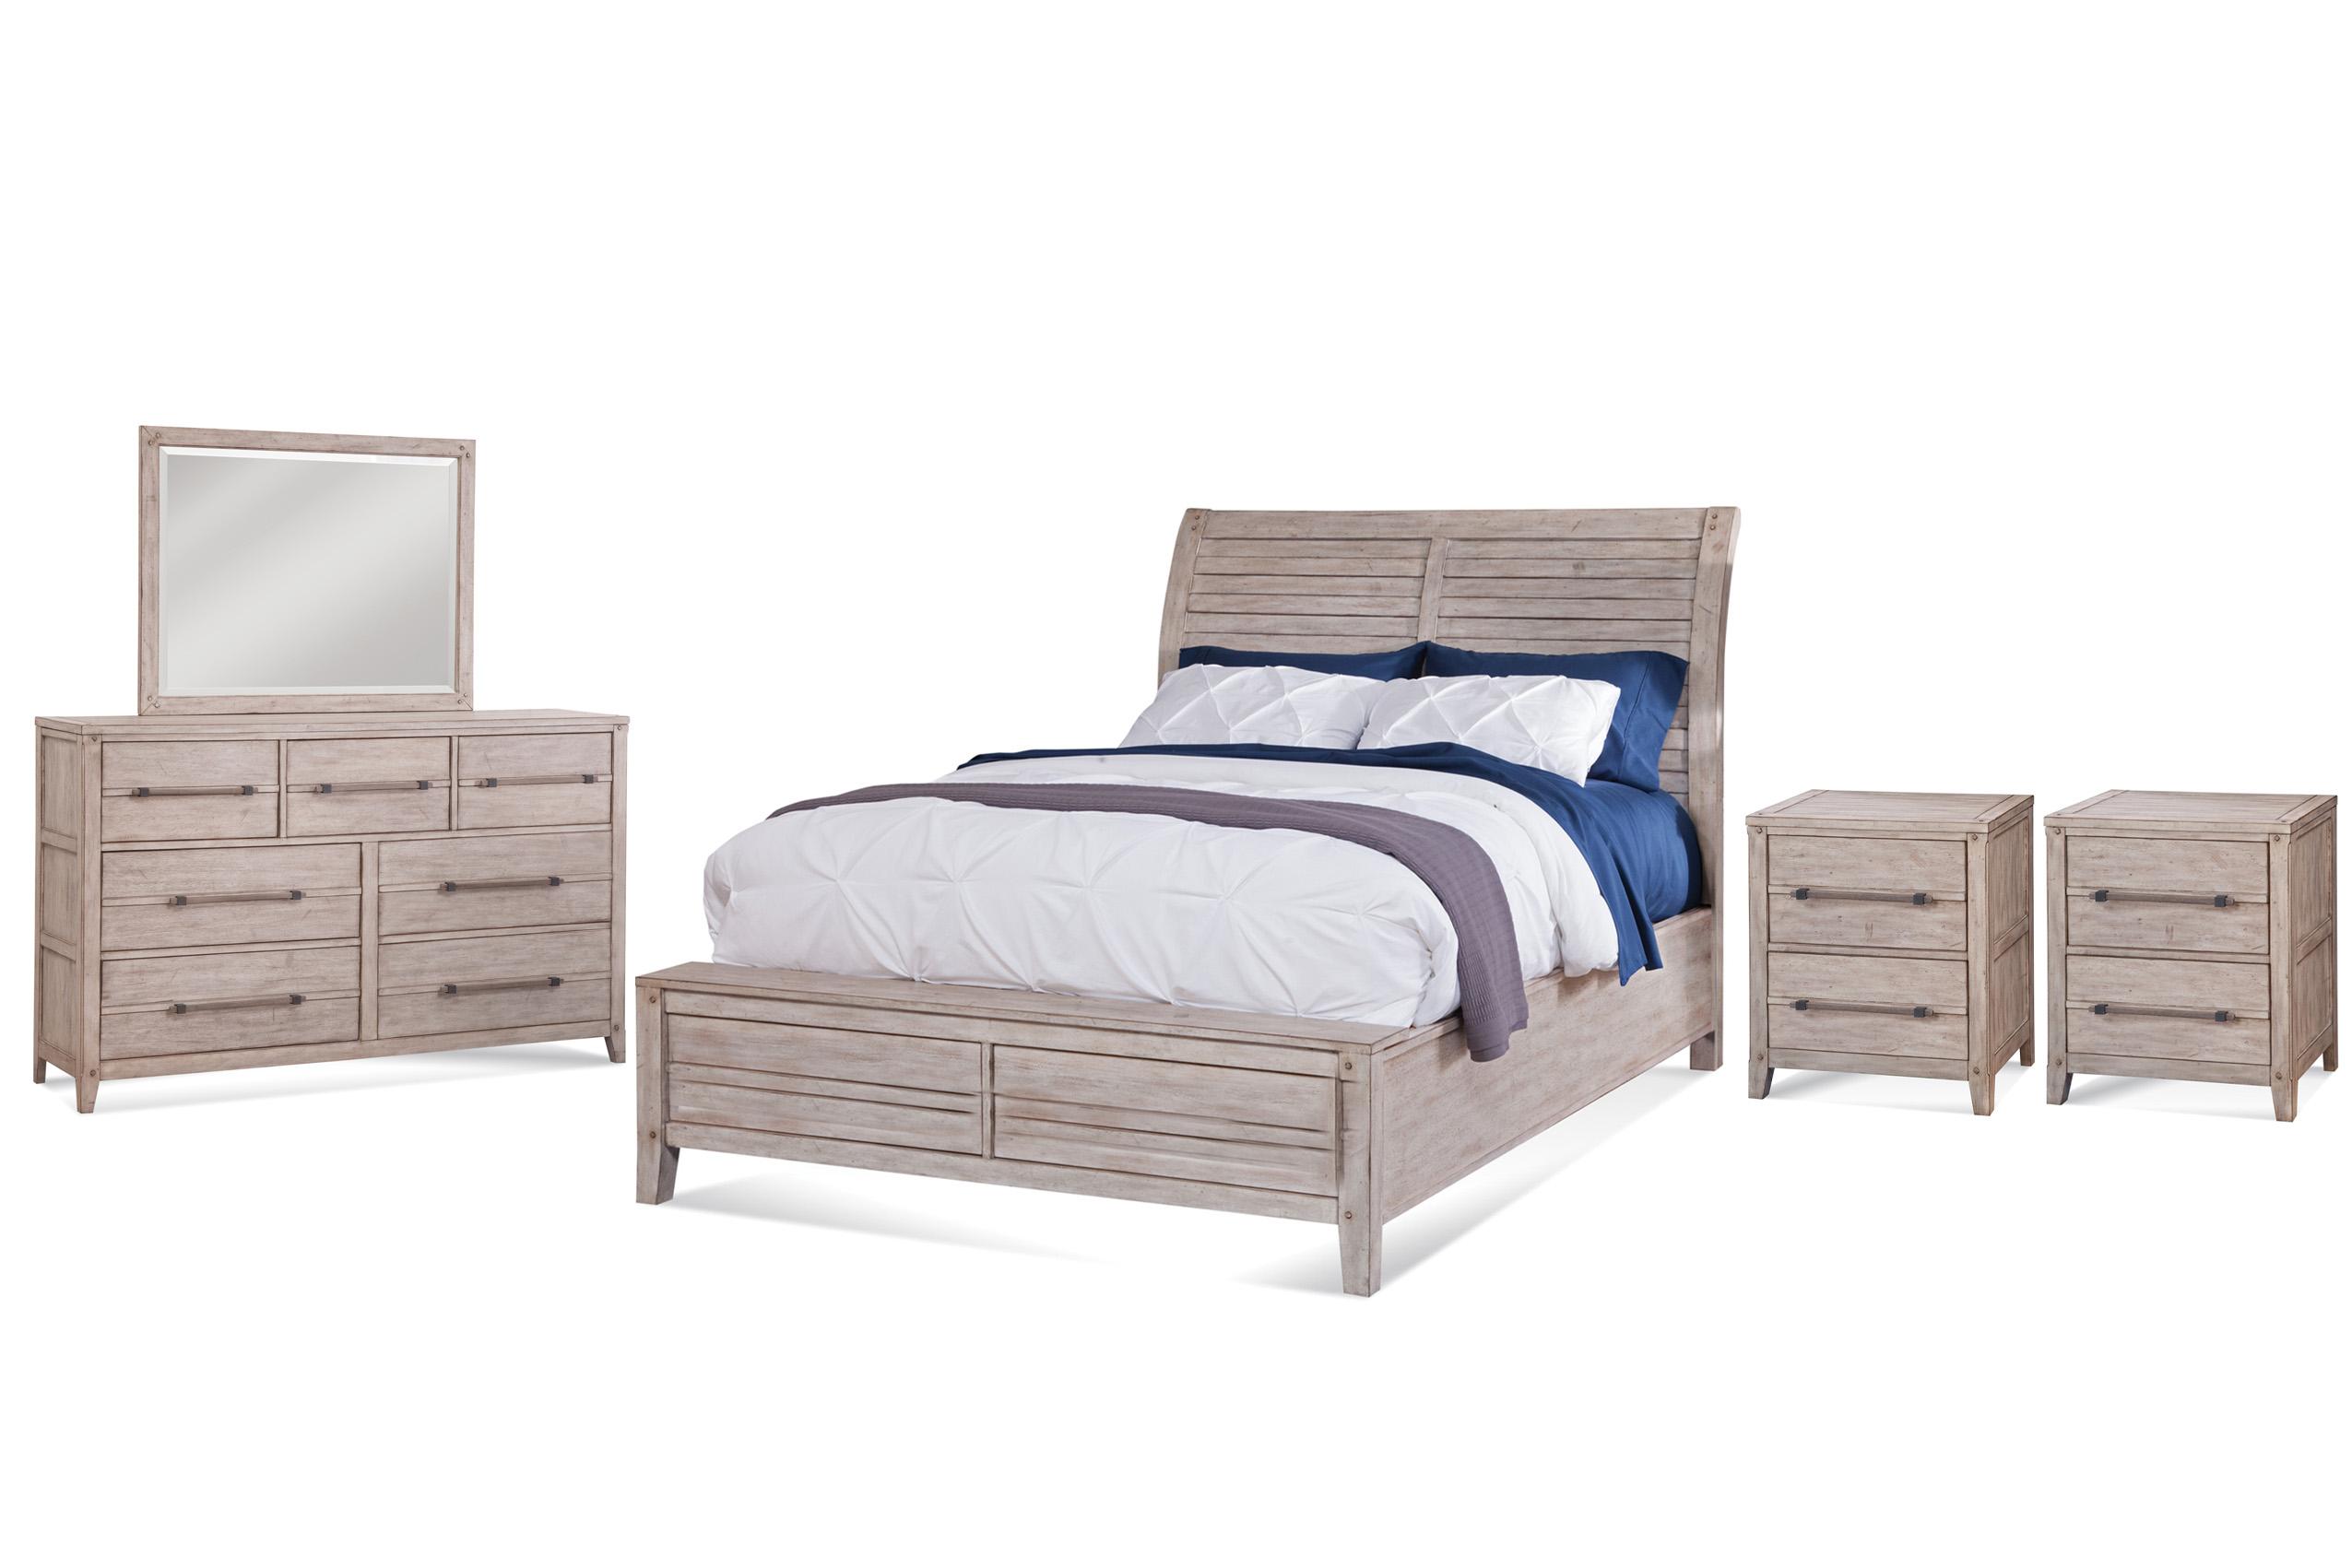 Classic, Traditional Sleigh Bedroom Set AURORA 2810-66SLP 2810-66SLP-2810-420-2NDM-5PC in whitewash 